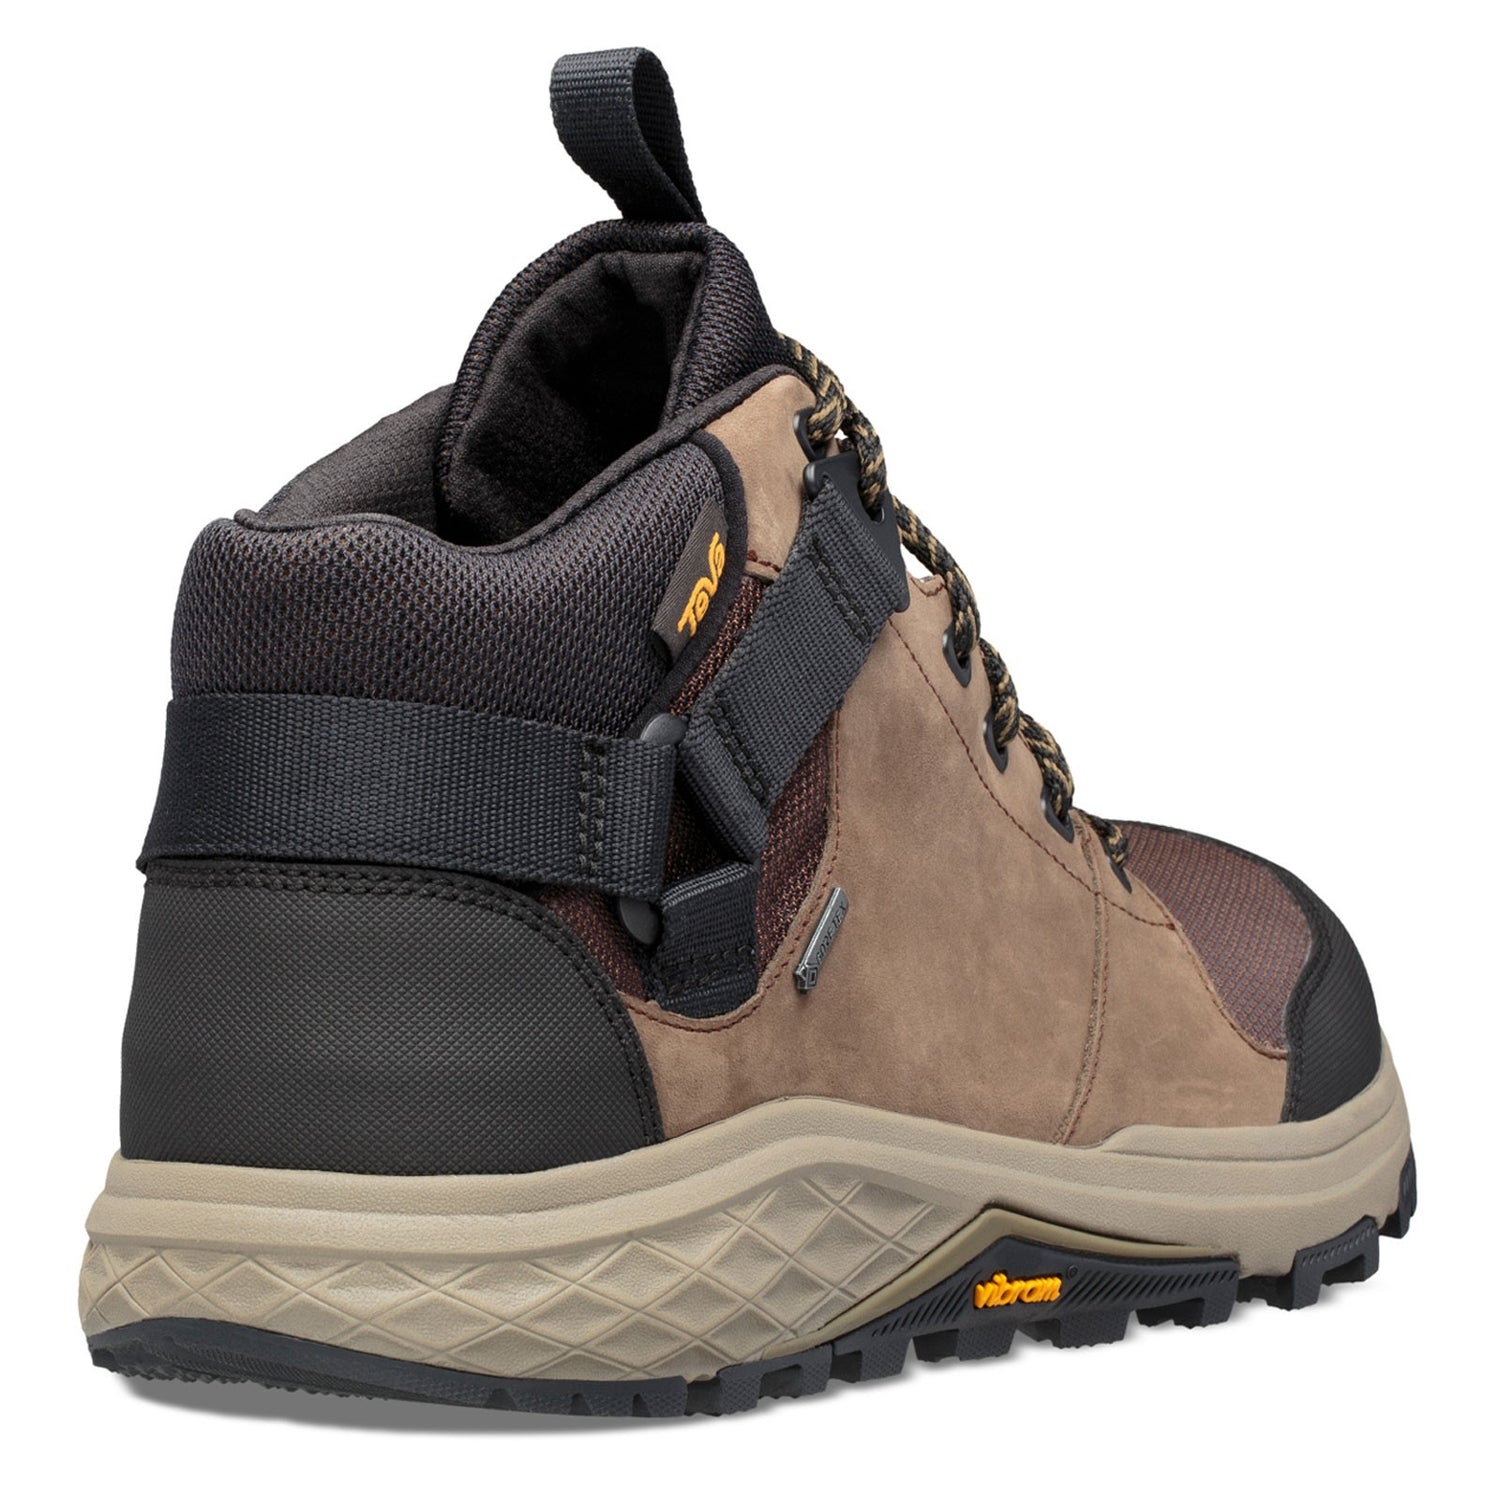 Peltz Shoes  Men's Teva Grandview GORE-TEX Waterproof Boot CHOCOLATE 1106804-CCHP